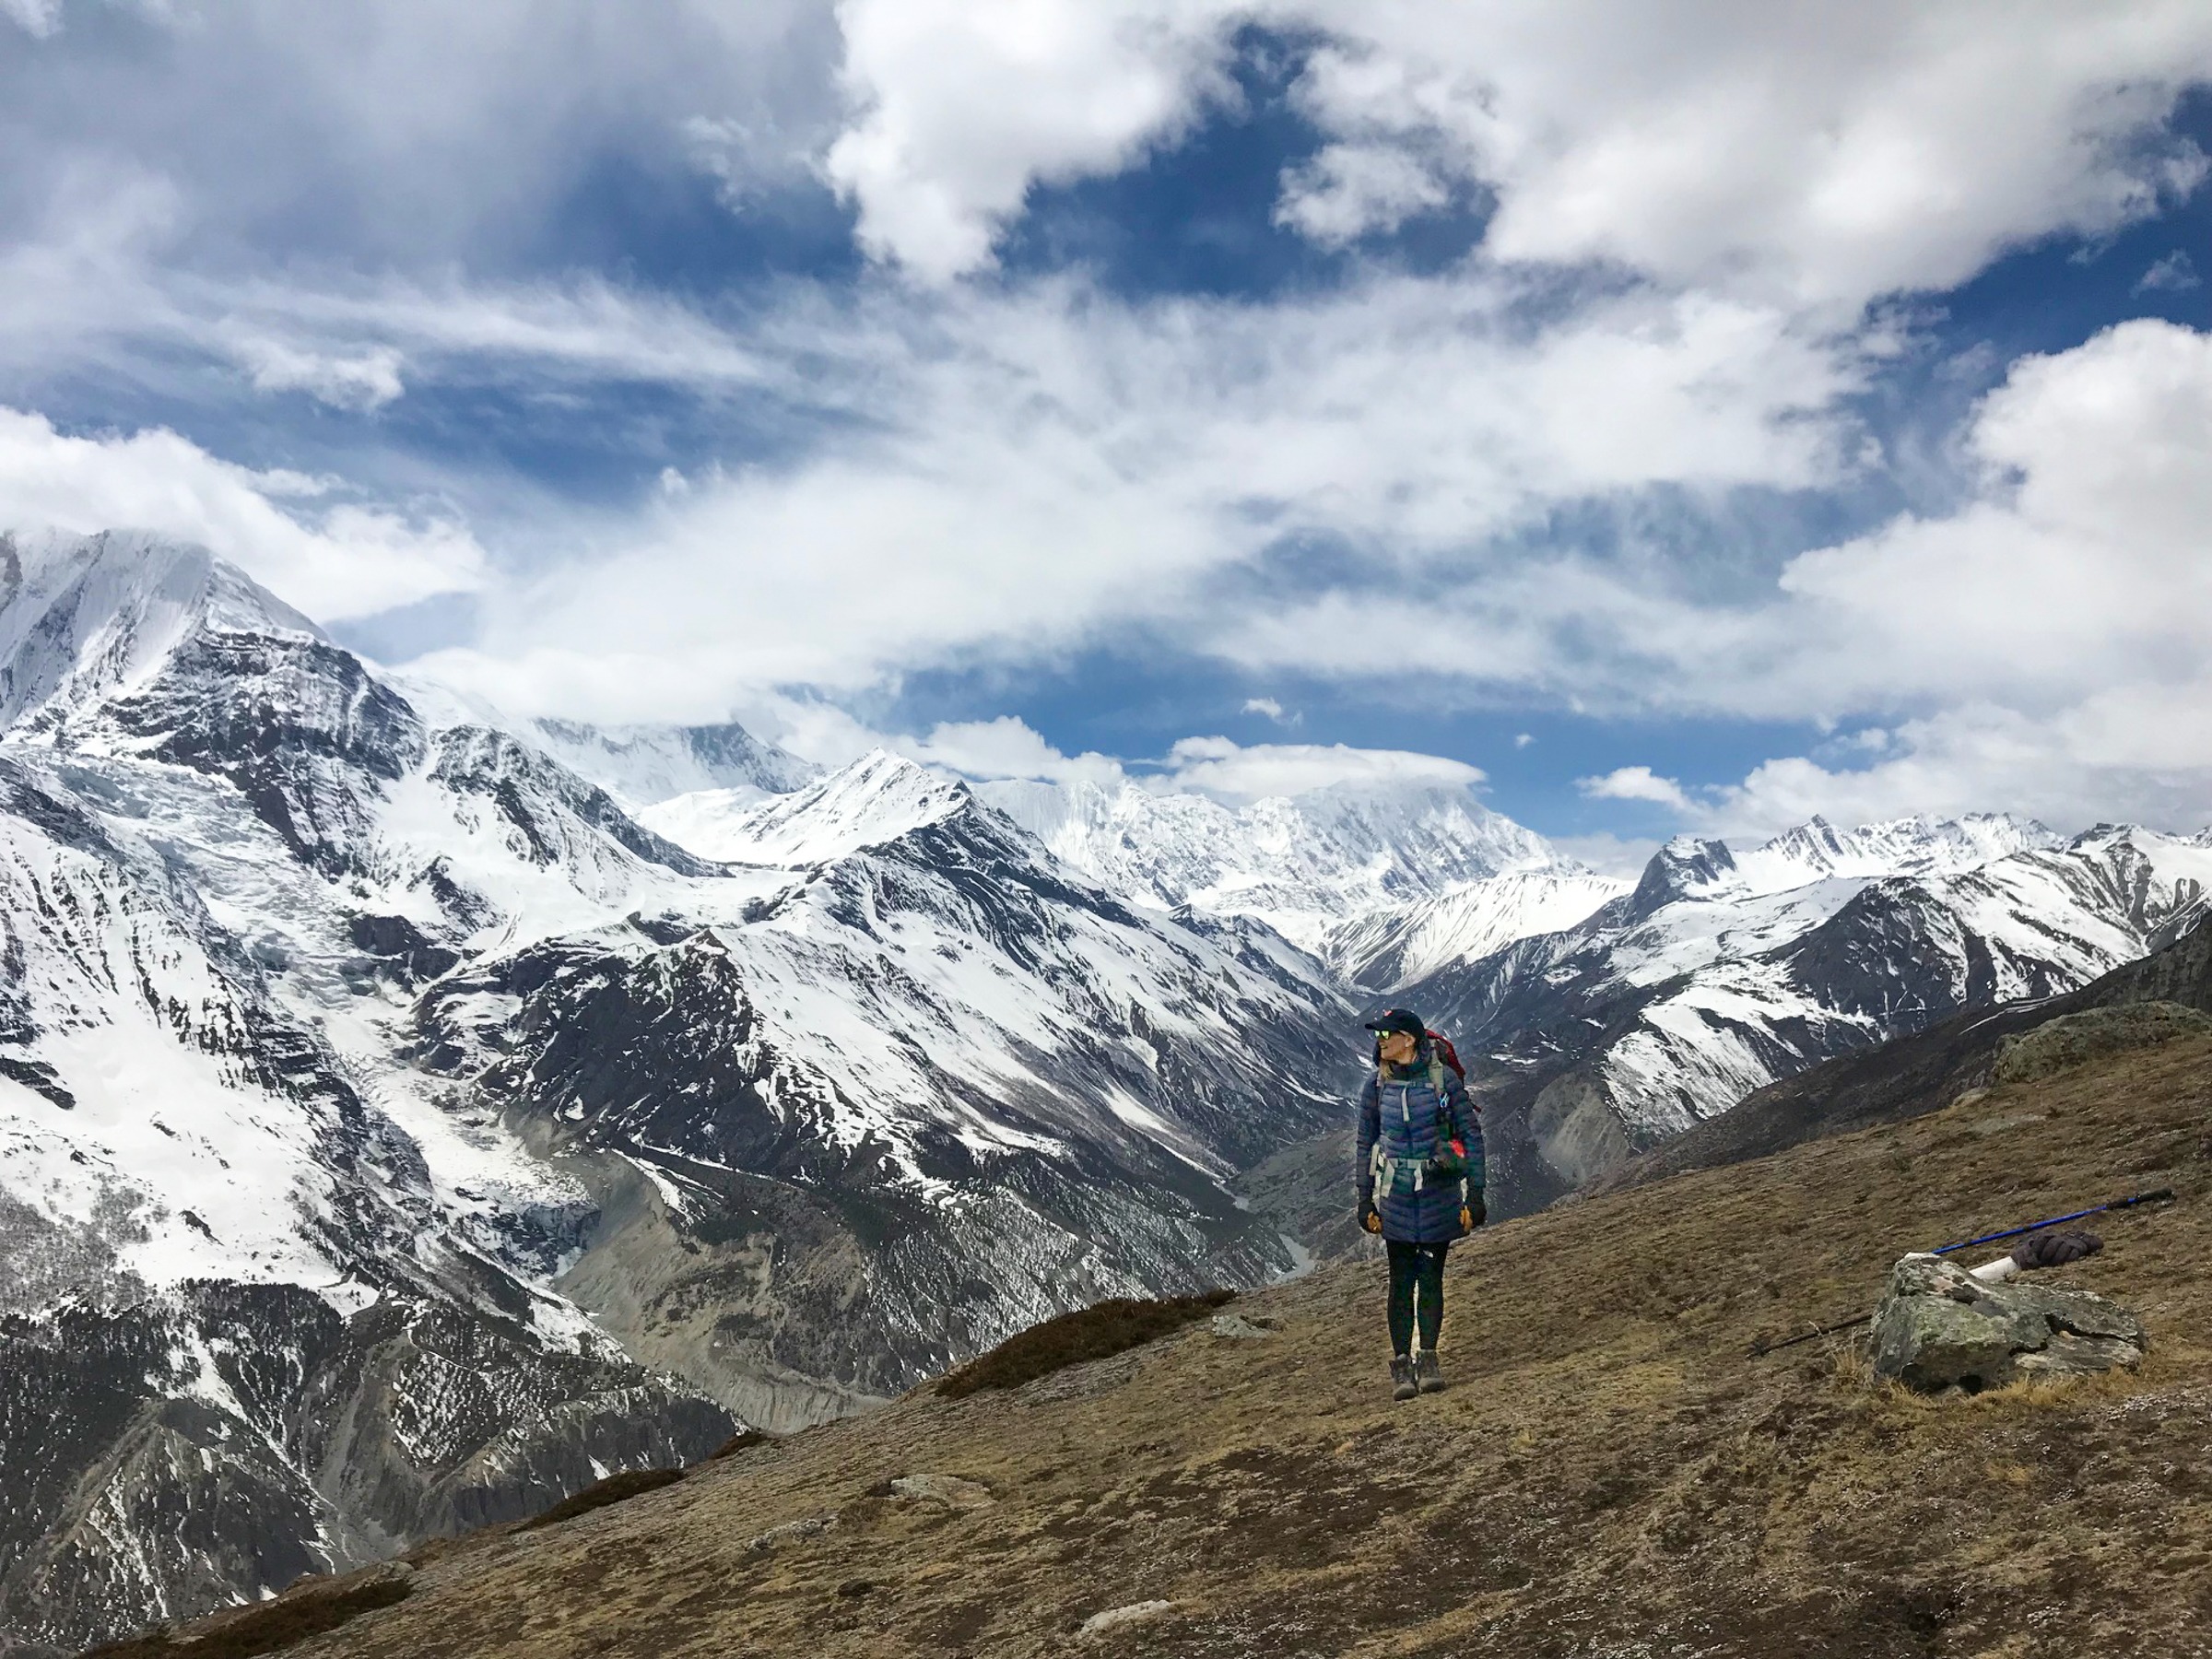 Dailyn Matthews Adventure Photographer trekking the Annapurna Circuit in the Himalayas, Nepal